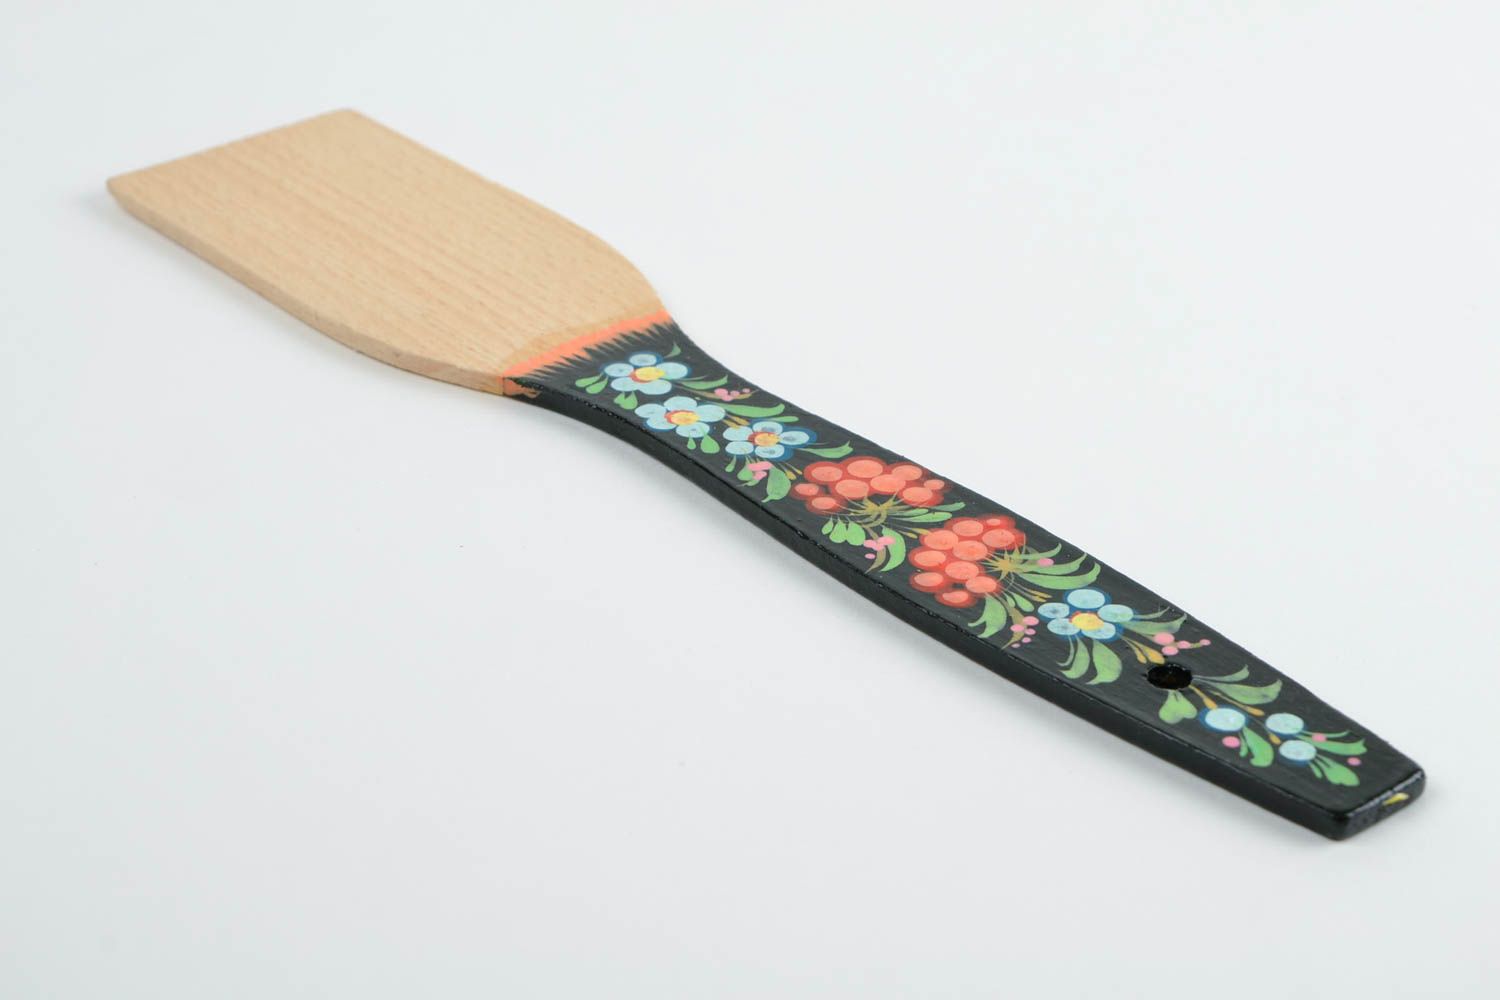 Beautiful handmade wooden spatula kitchen design cooking tools gift ideas photo 4